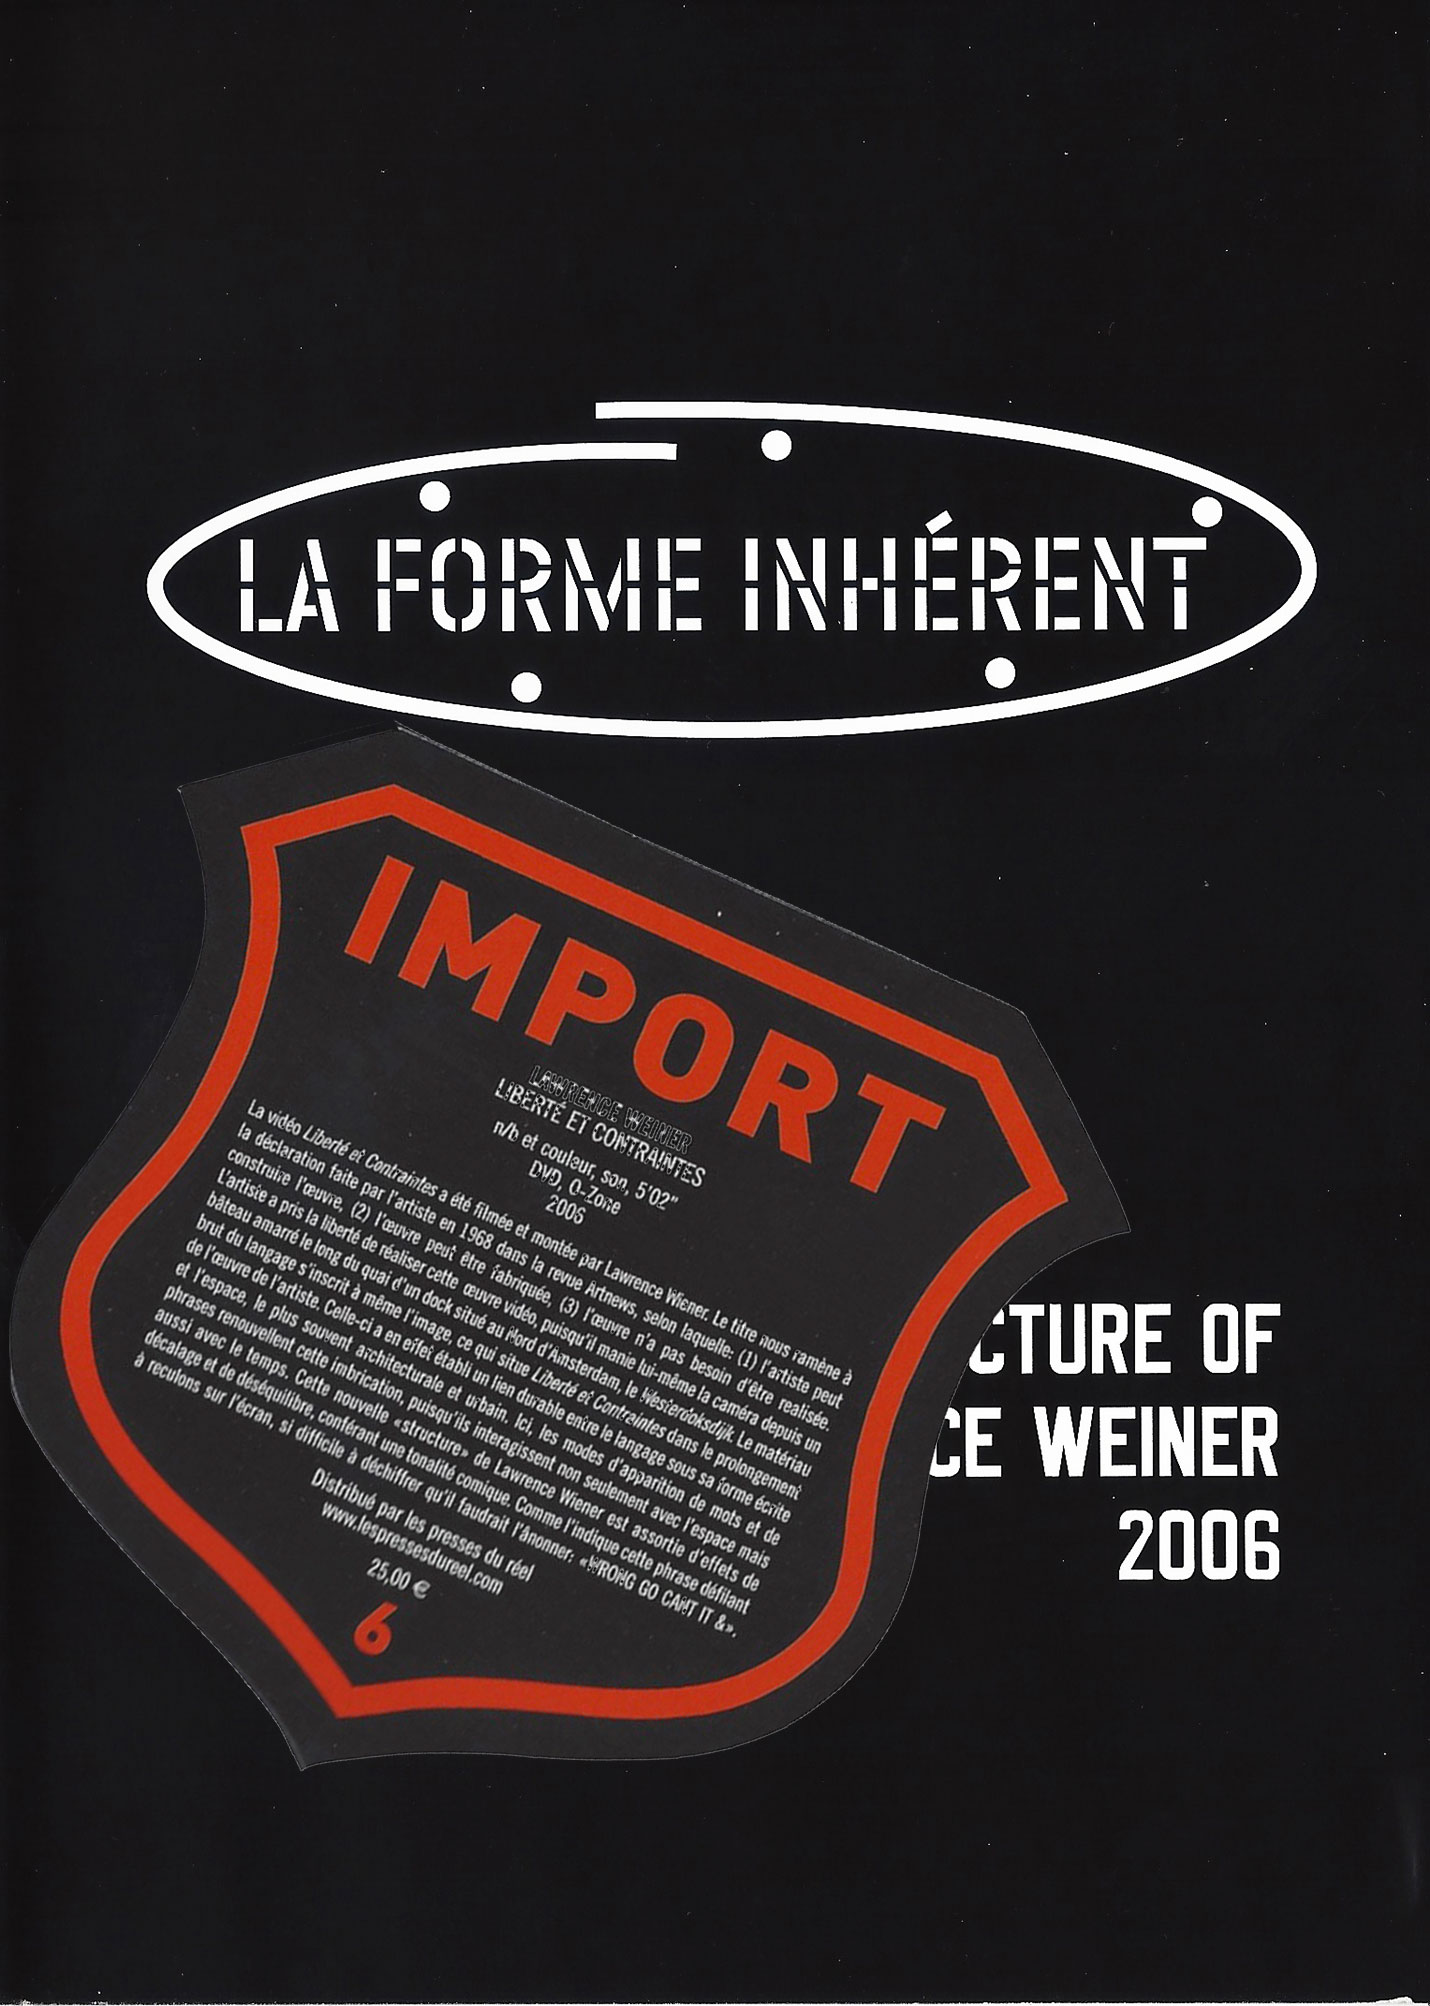 Lawrence Weiner - Libert et contraintes, 2006